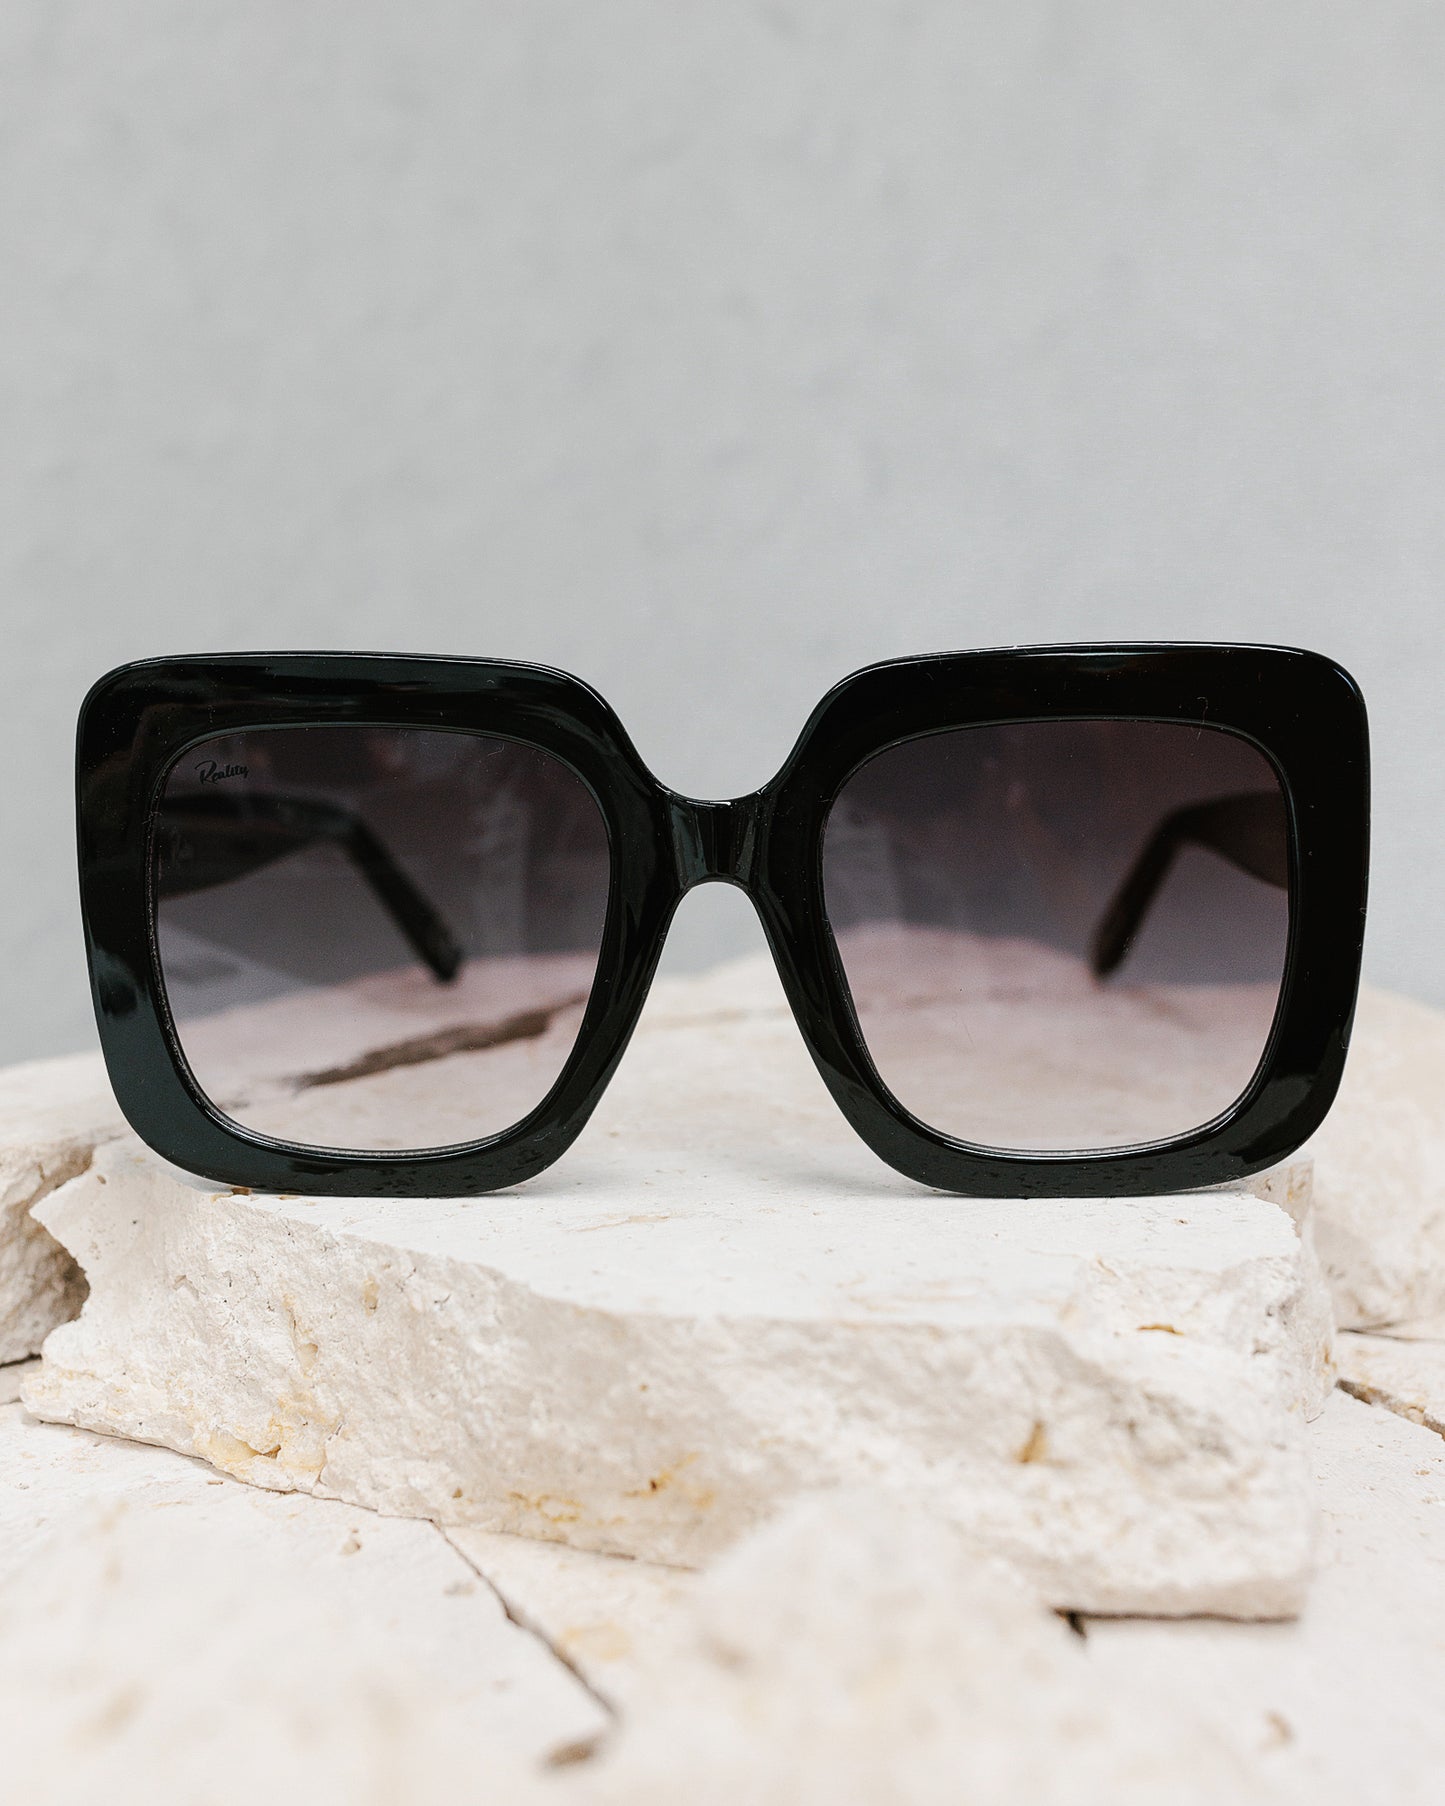 Mustique Sunglasses - Jett Black